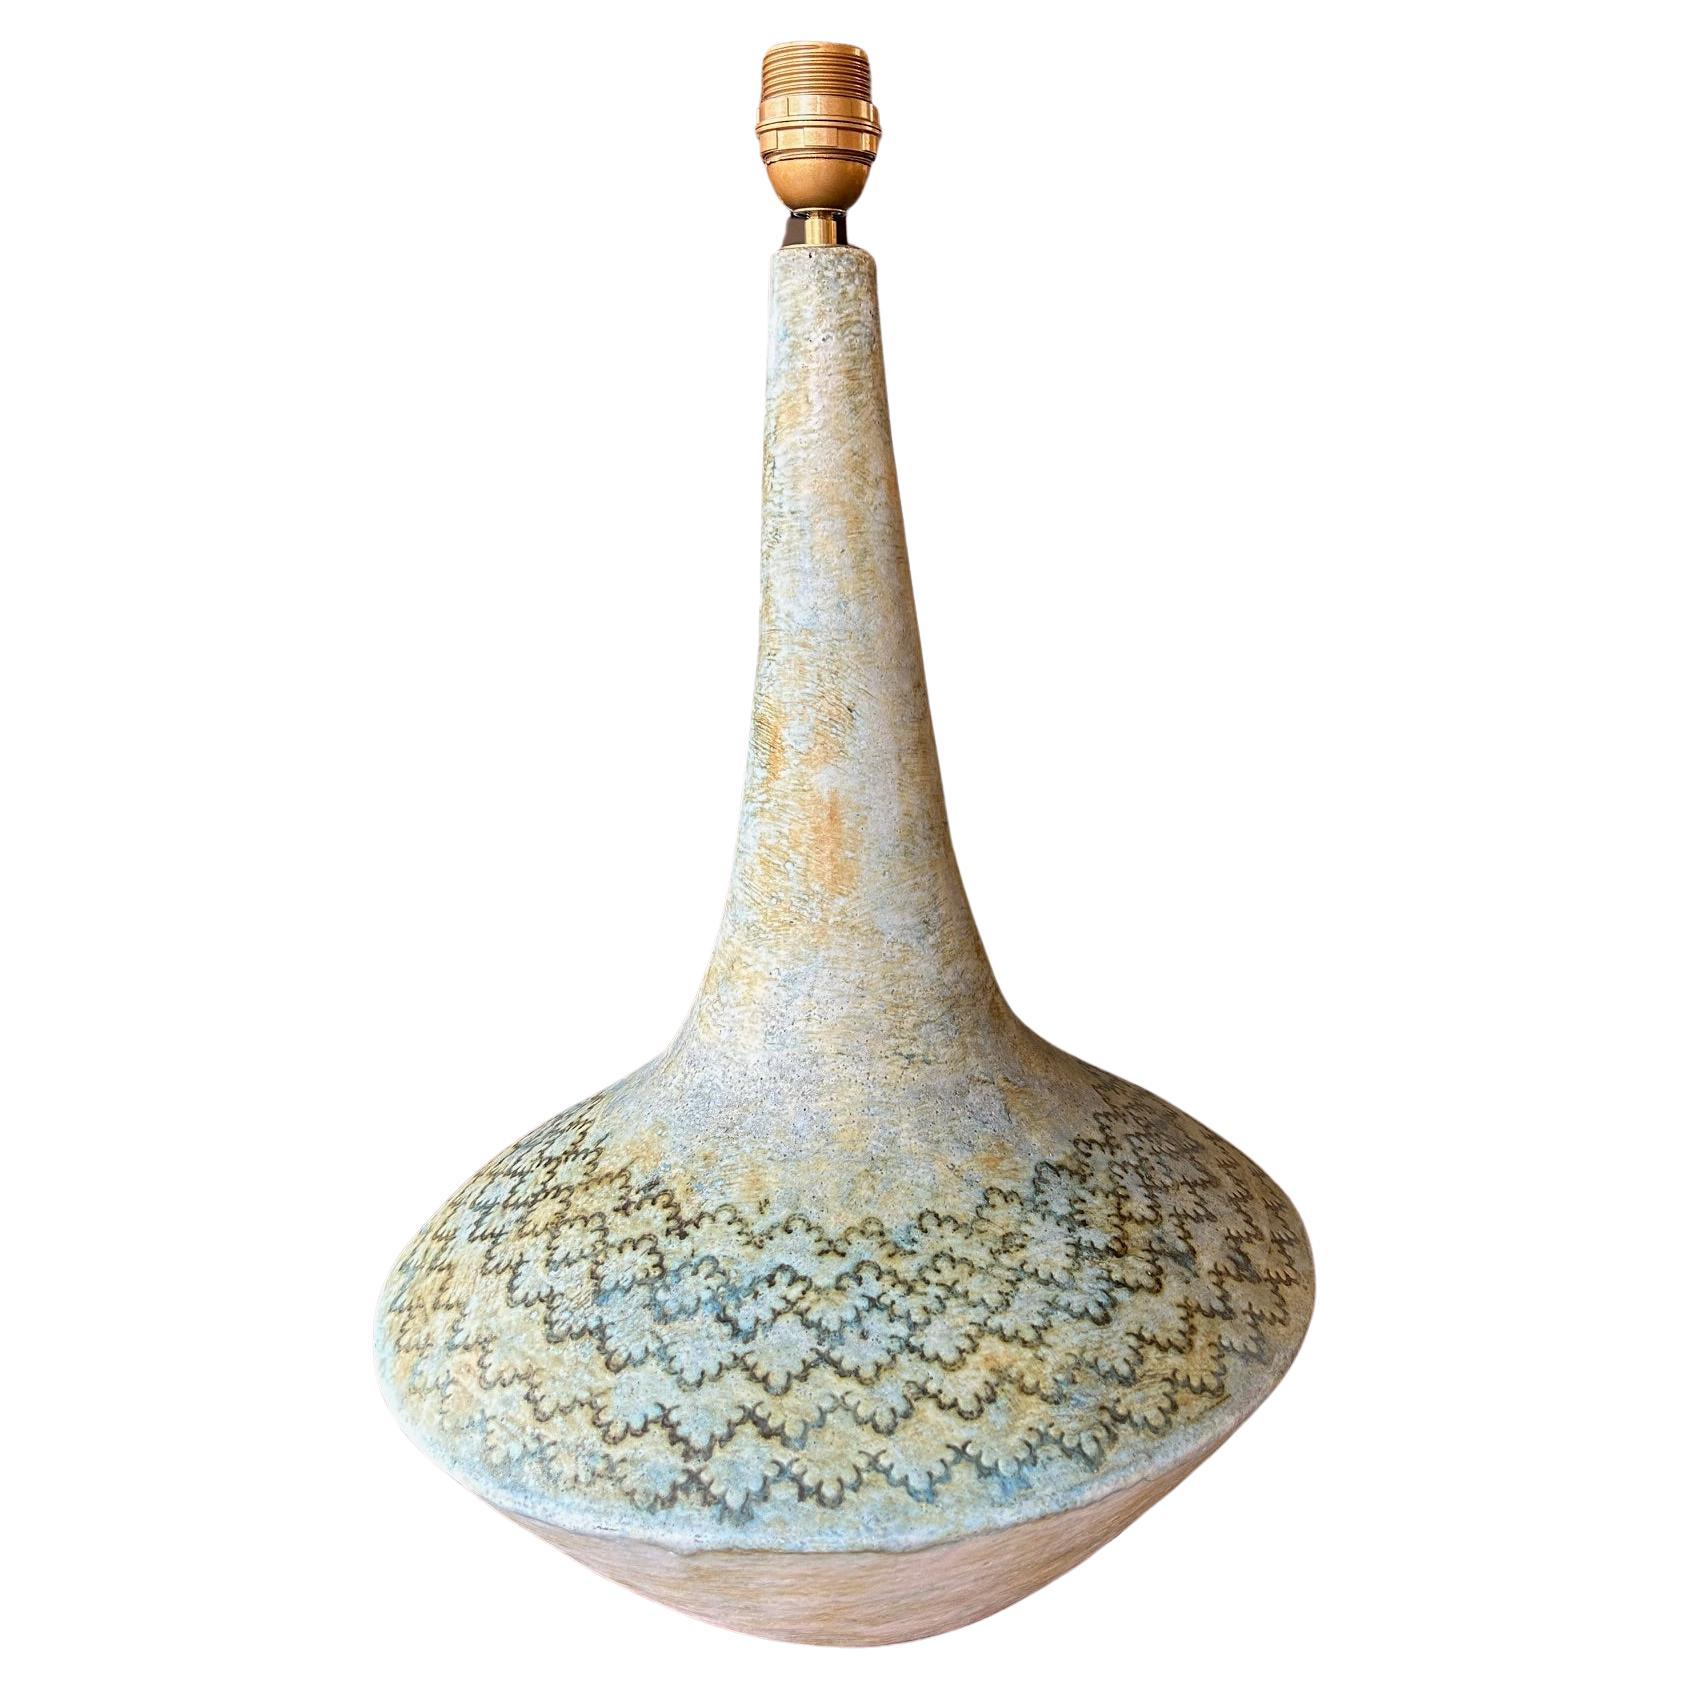 Ceramic lamp by Les 2 Potiers, France, 1960s